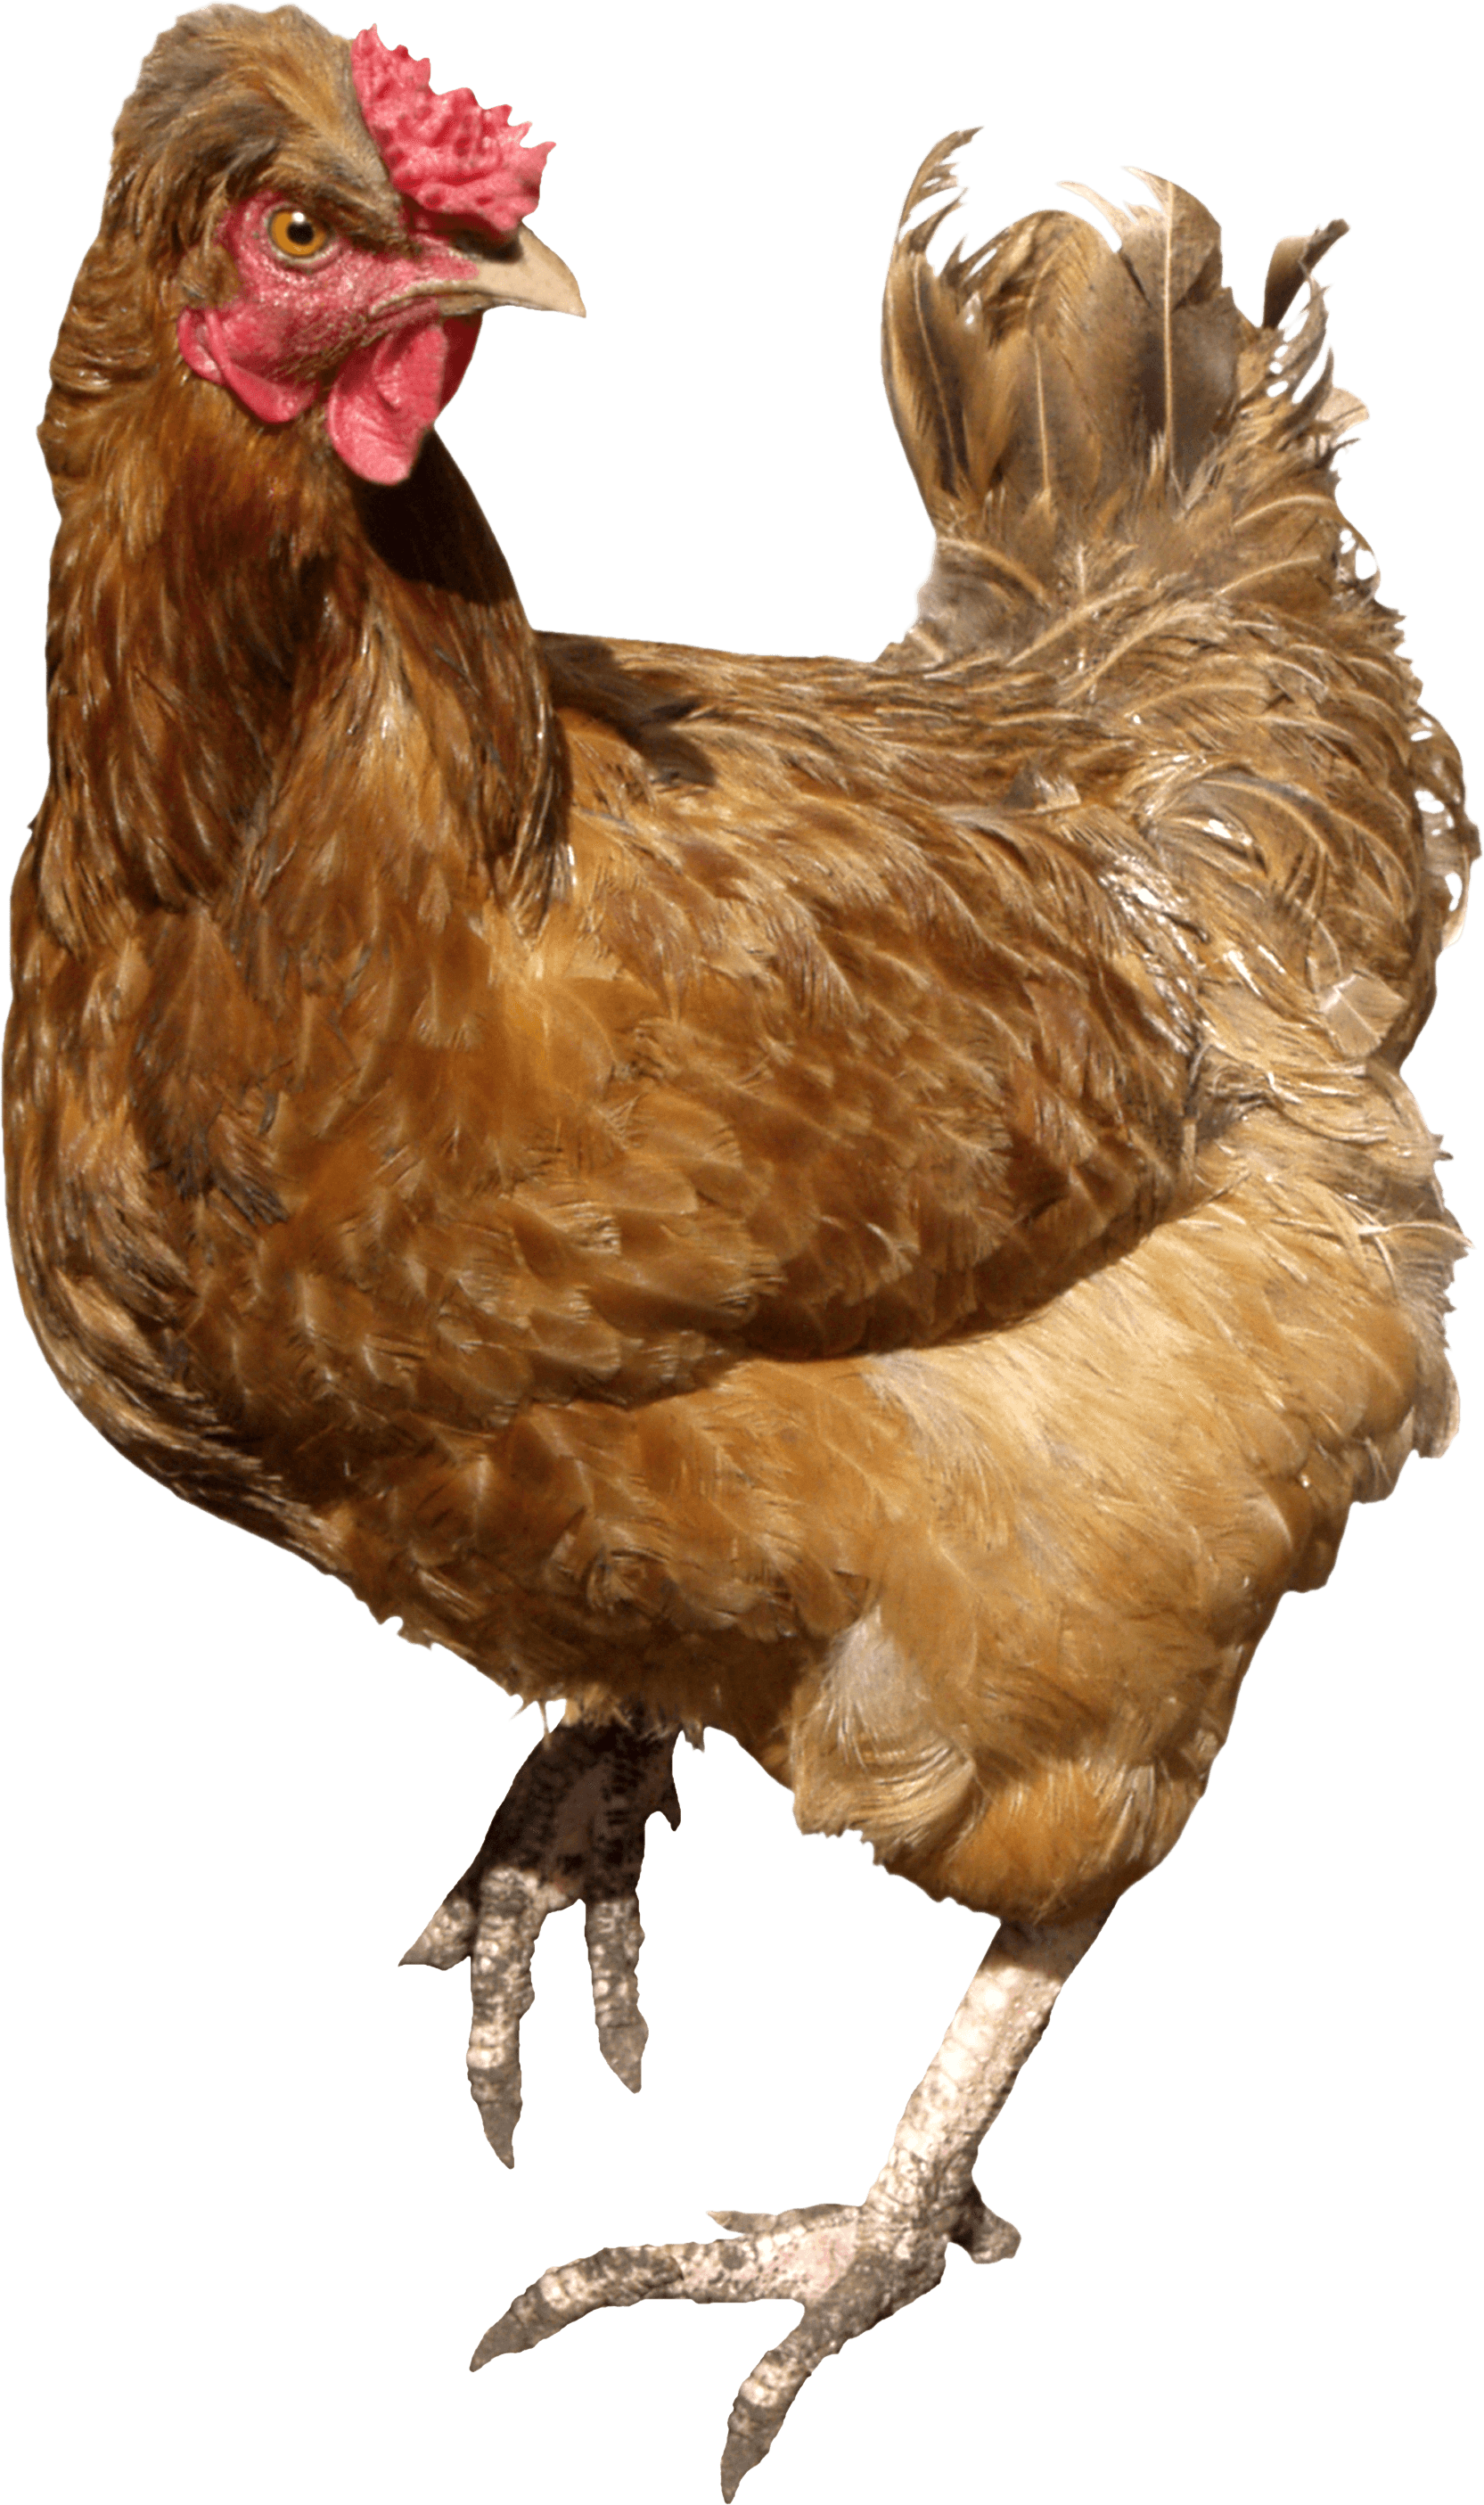 Brown running Chicken PNG Image - PurePNG | Free ...